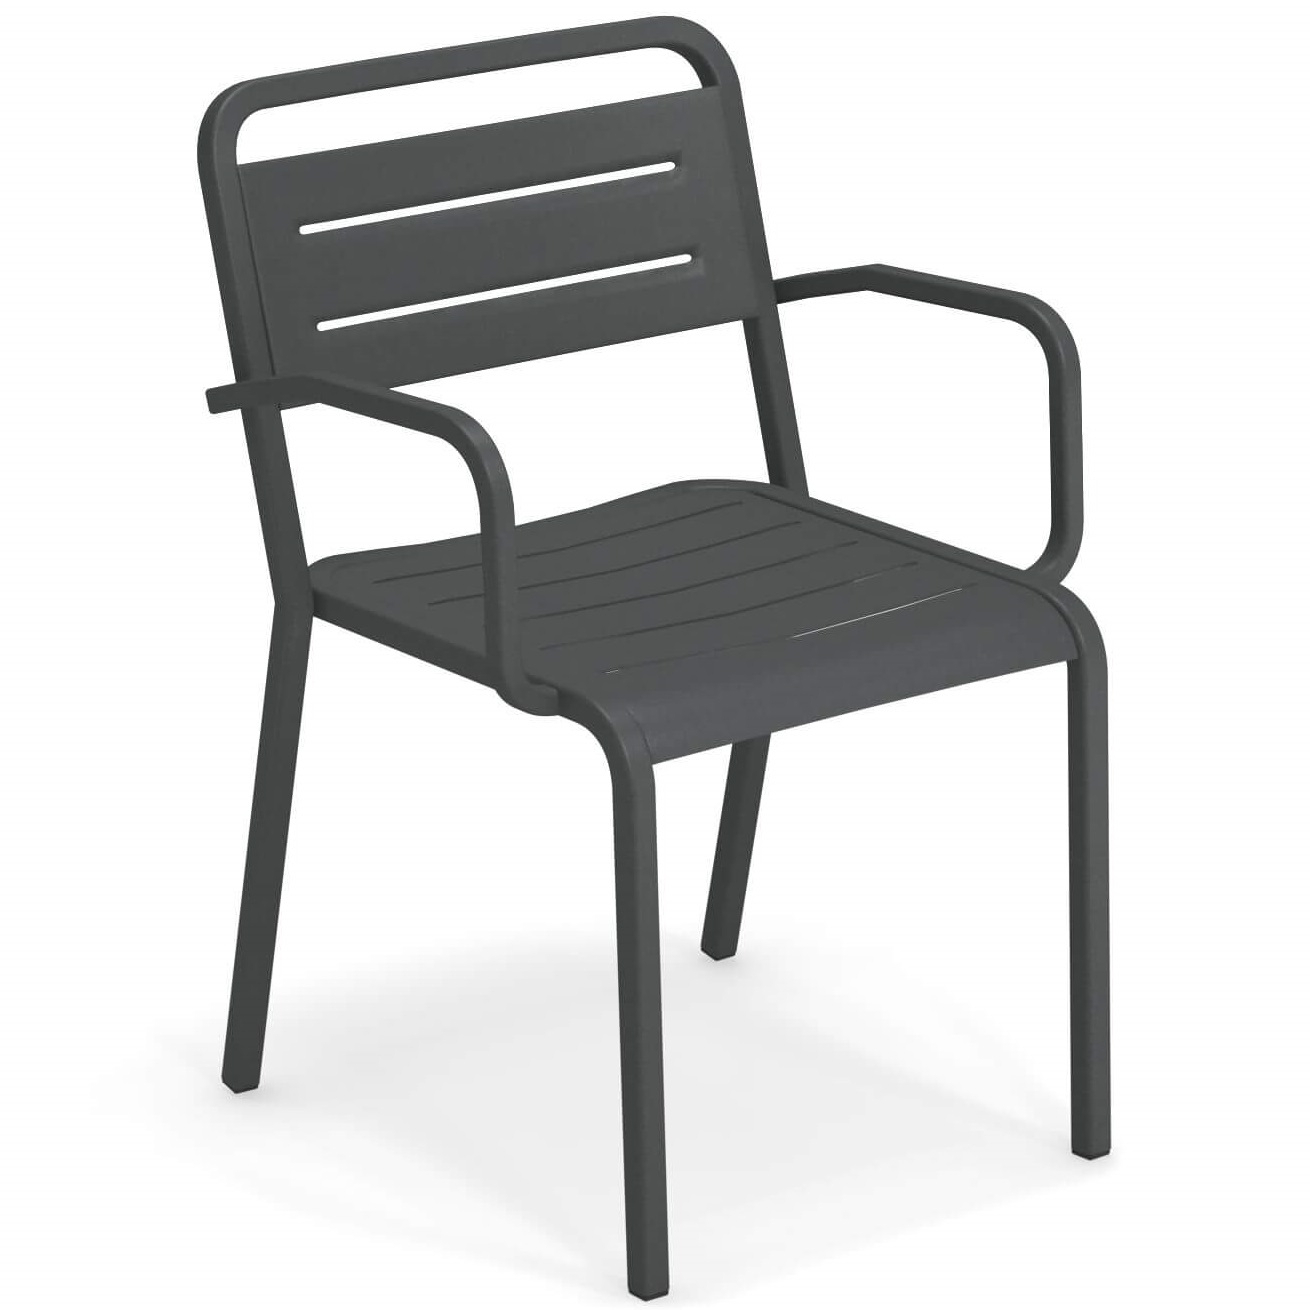 Výprodej Emu designové zahradní židle Urban Armchair (antracitová)